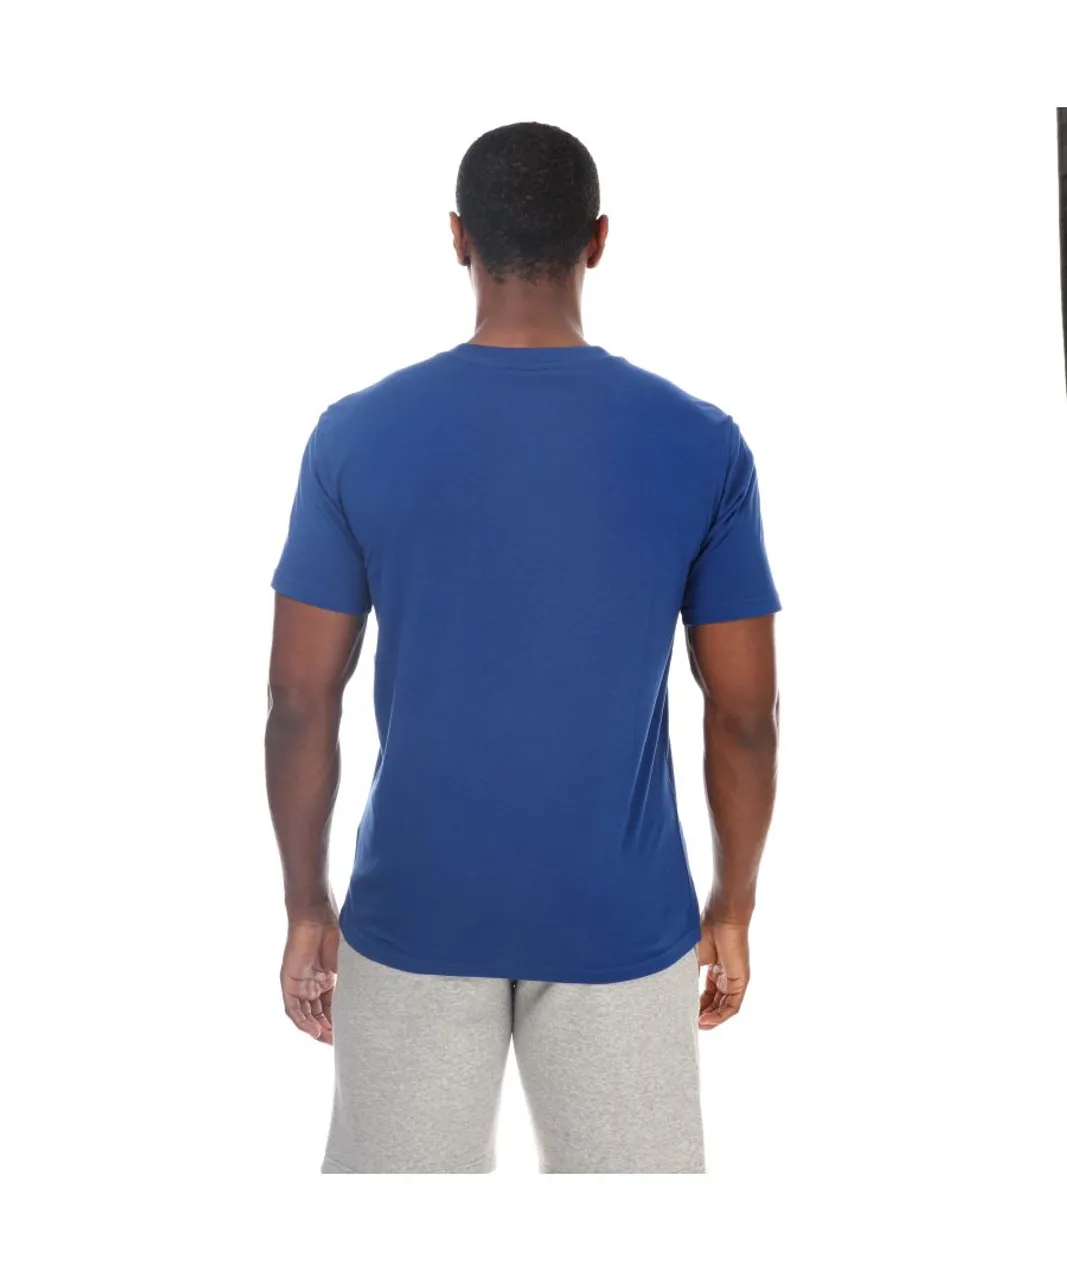 Champion Mens Crew Neck T-Shirt in Blue Cotton